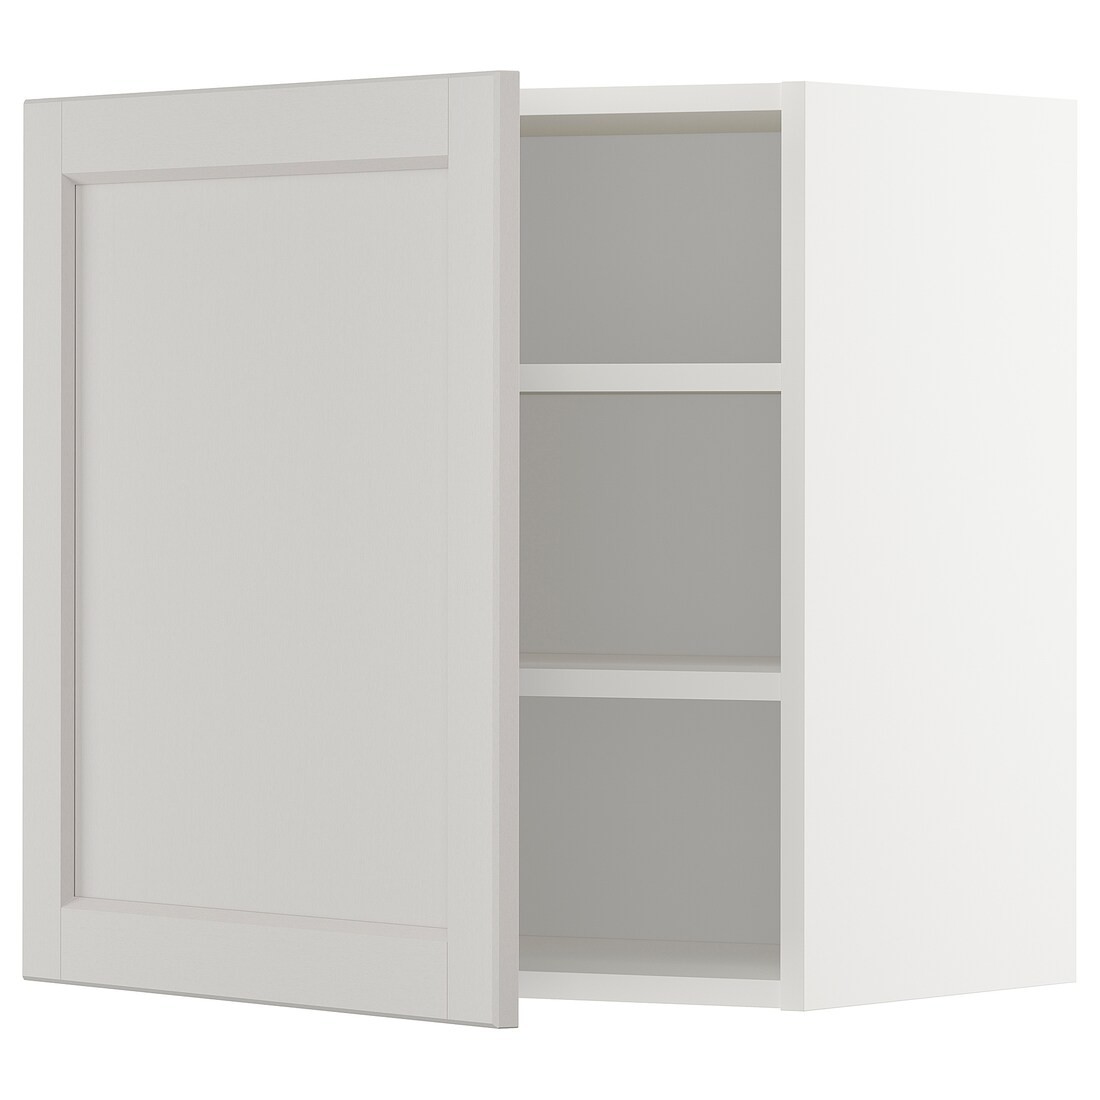 IKEA METOD МЕТОД Шкаф навесной с полками, белый / Lerhyttan светло-серый, 60x60 см 19457240 | 194.572.40